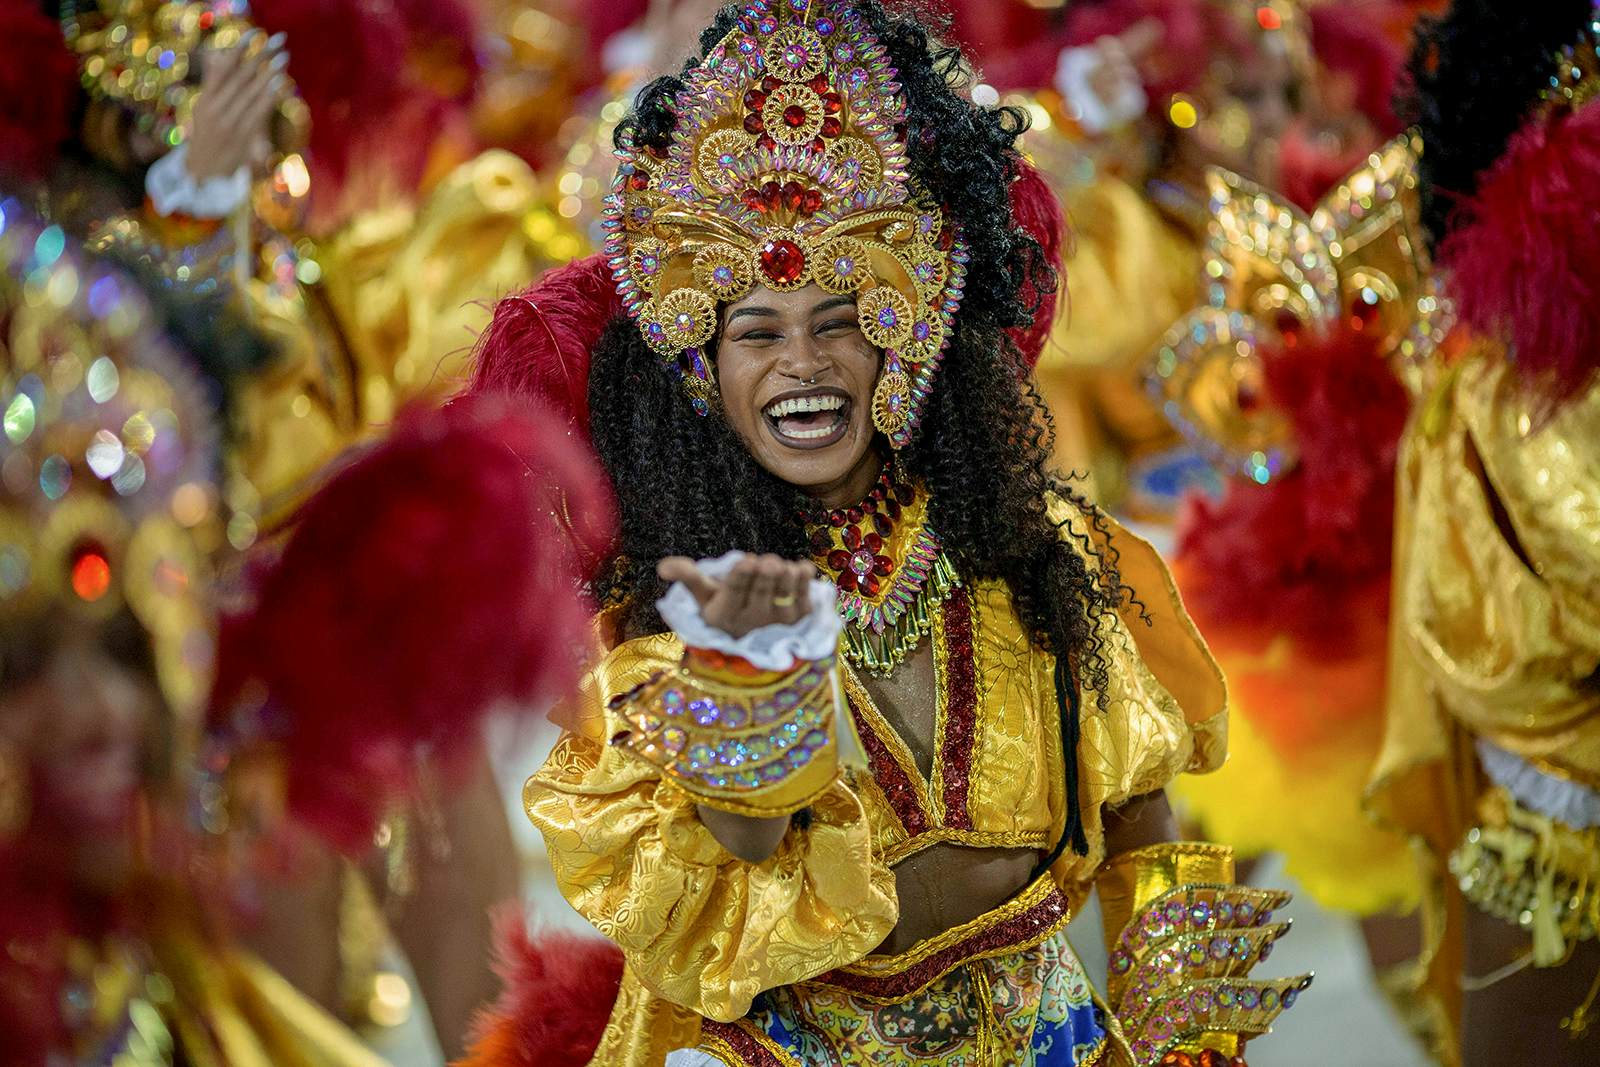 Rio Carnival: The UK woman leading the dance in Brazil